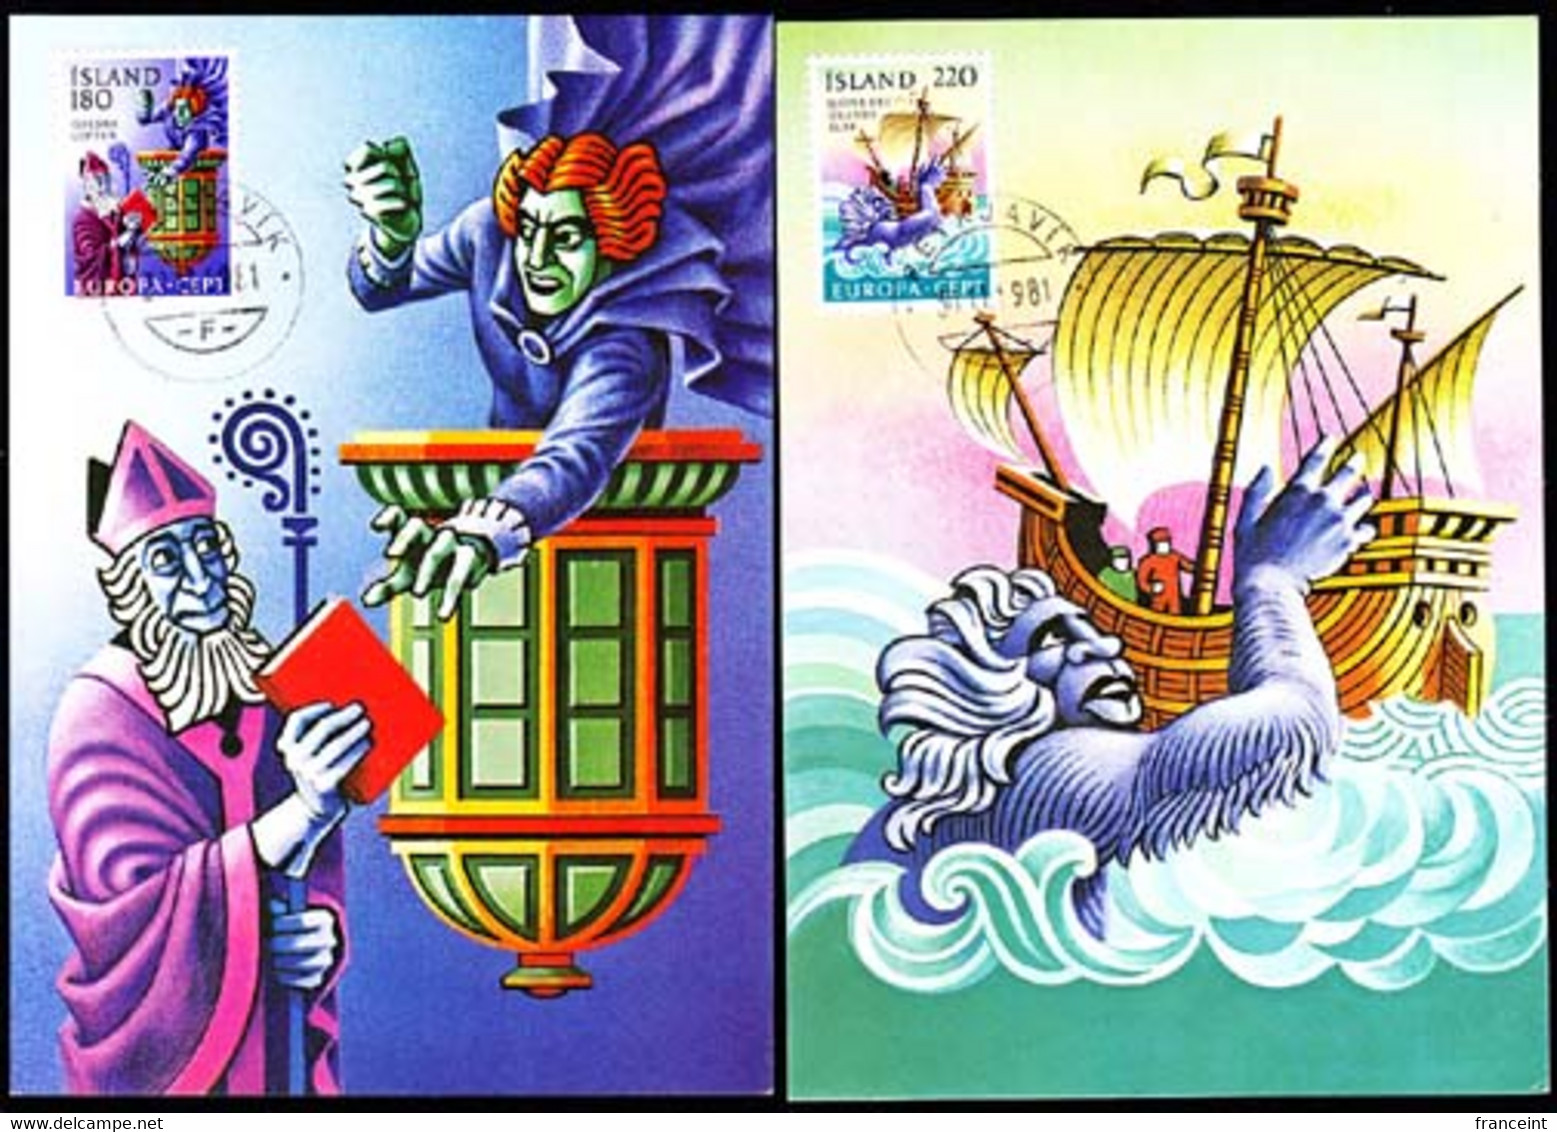 ICELAND (1981) Luftur The Sorcerer. Sea Witch. Set Of 2 Maximum Cards. Scott Nos 541-2, Yvert Nos 518-9 - Tarjetas – Máxima